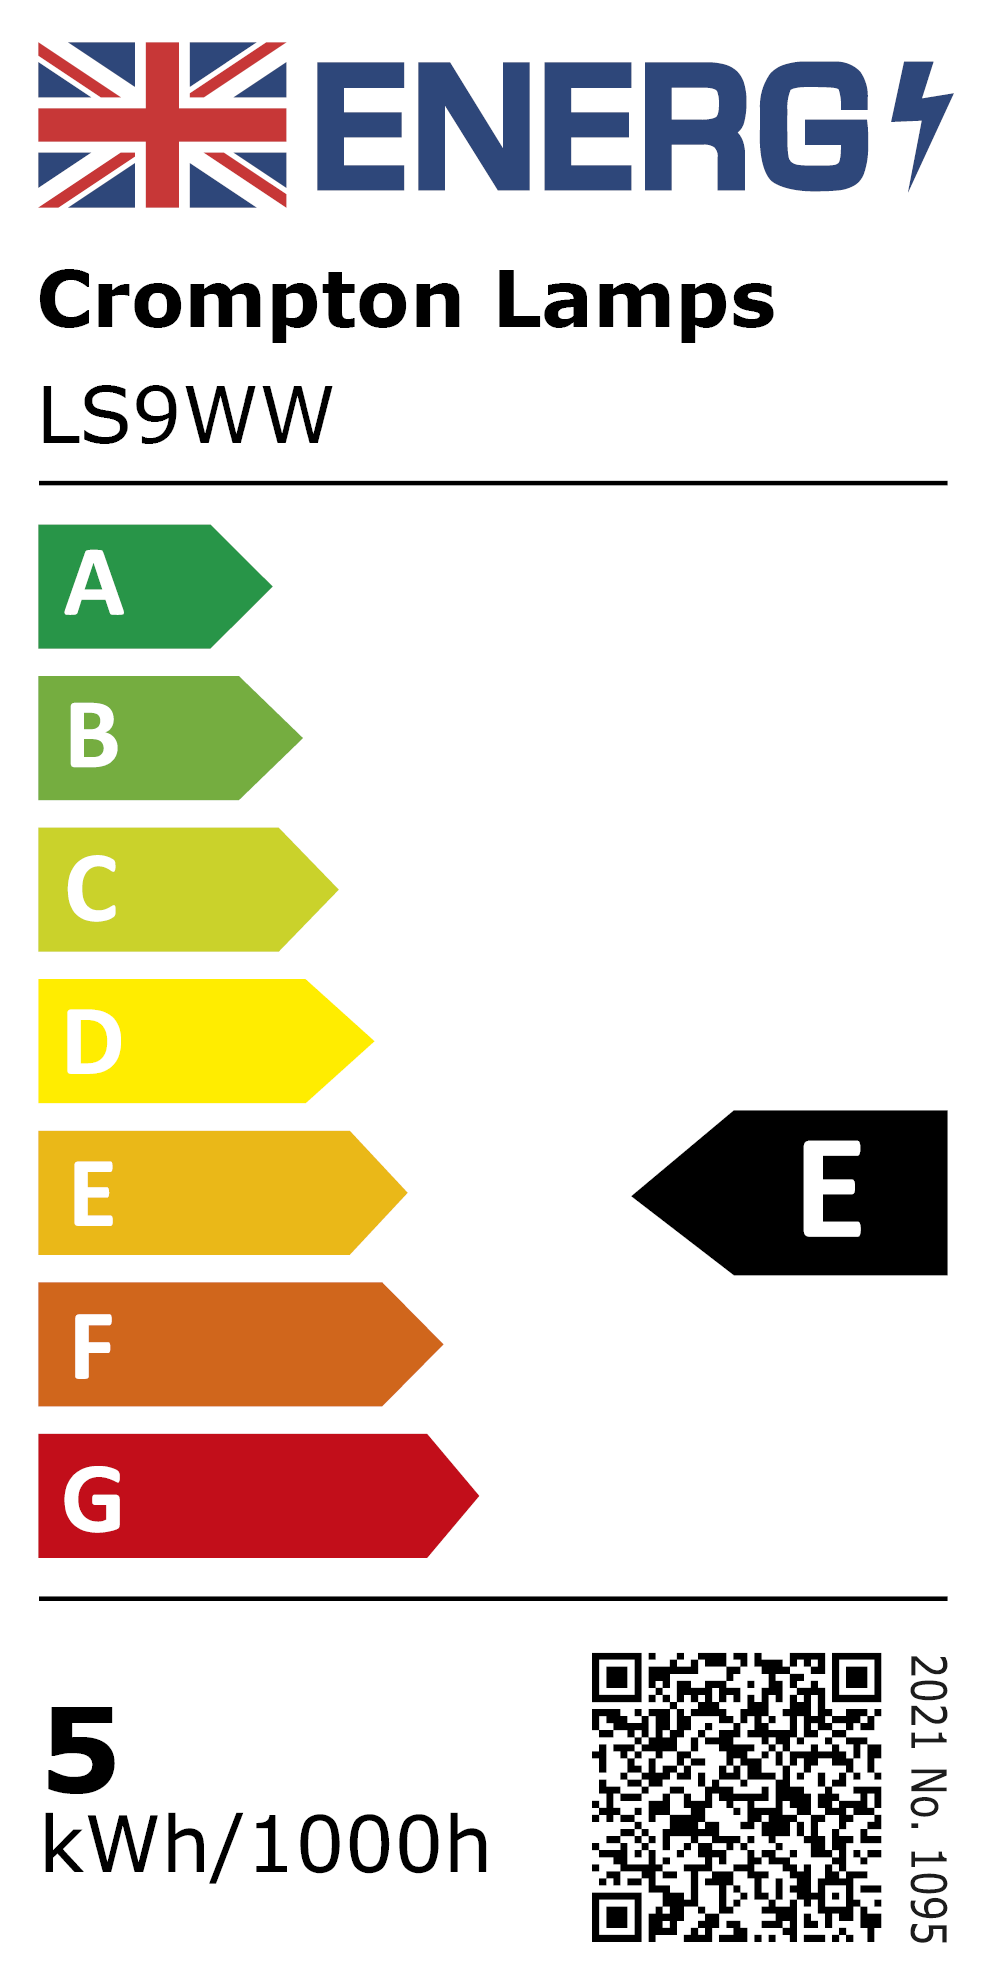 New 2021 Energy Rating Label: MPN LS9WW